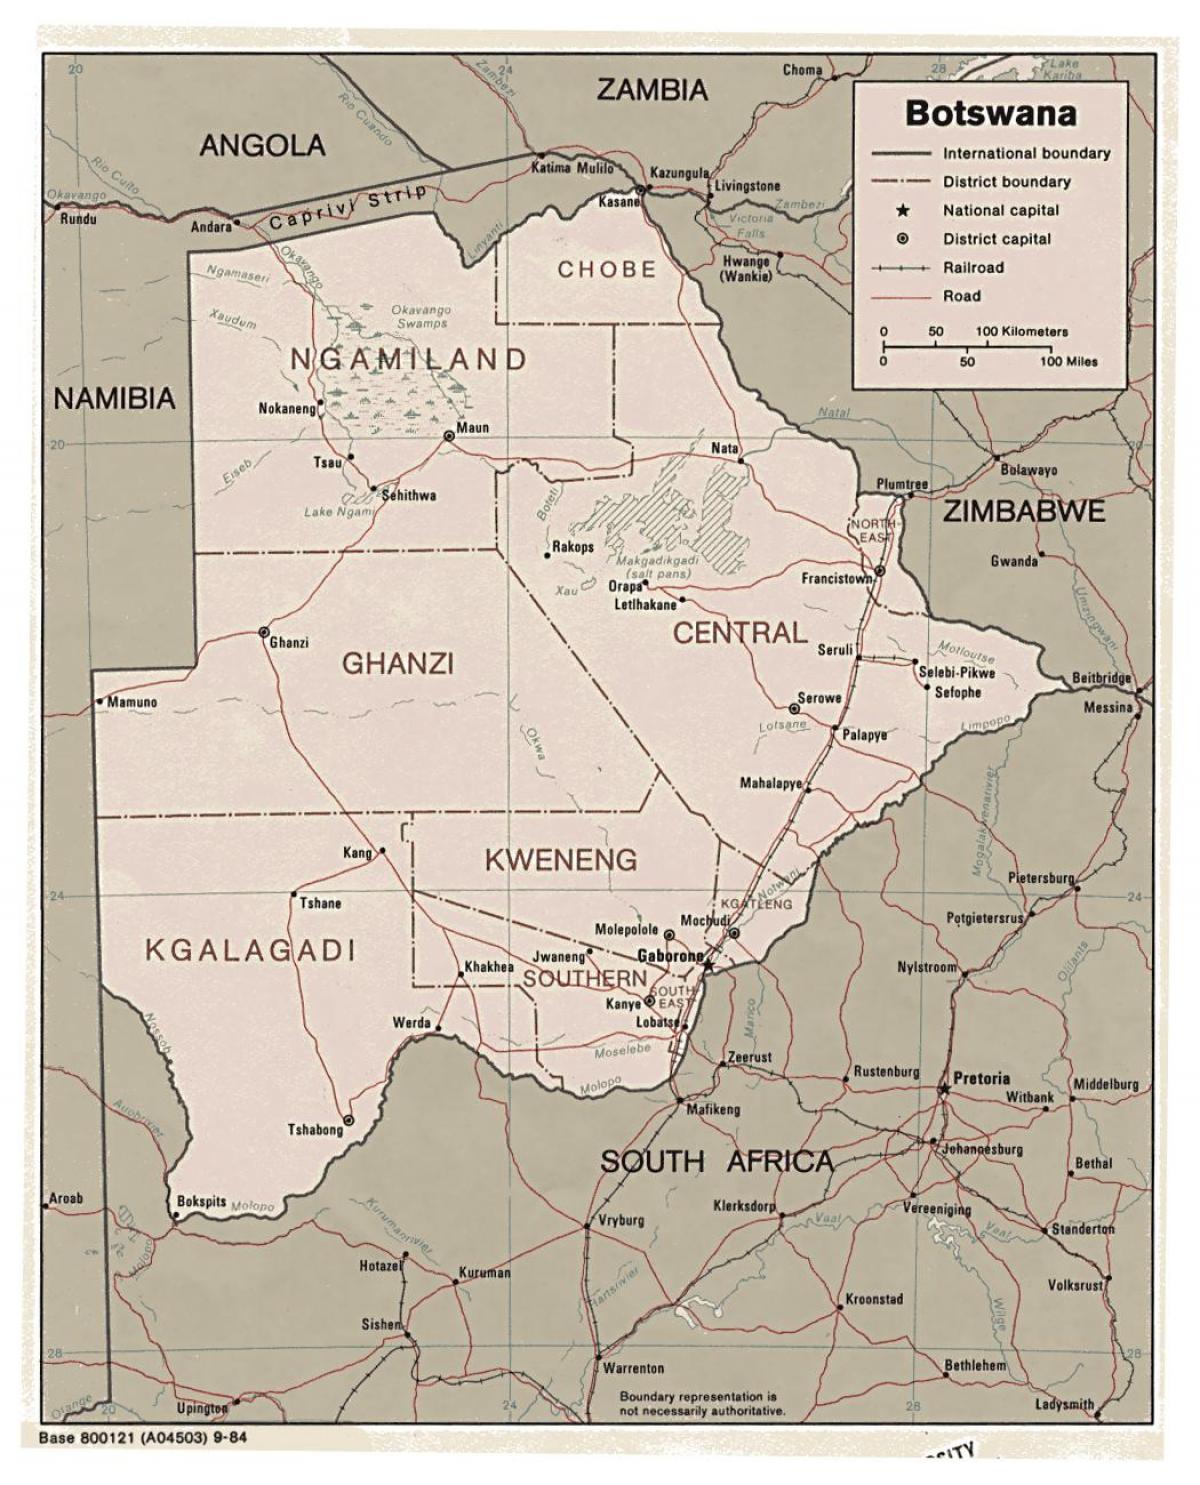 nákvæmar kort af Botswana